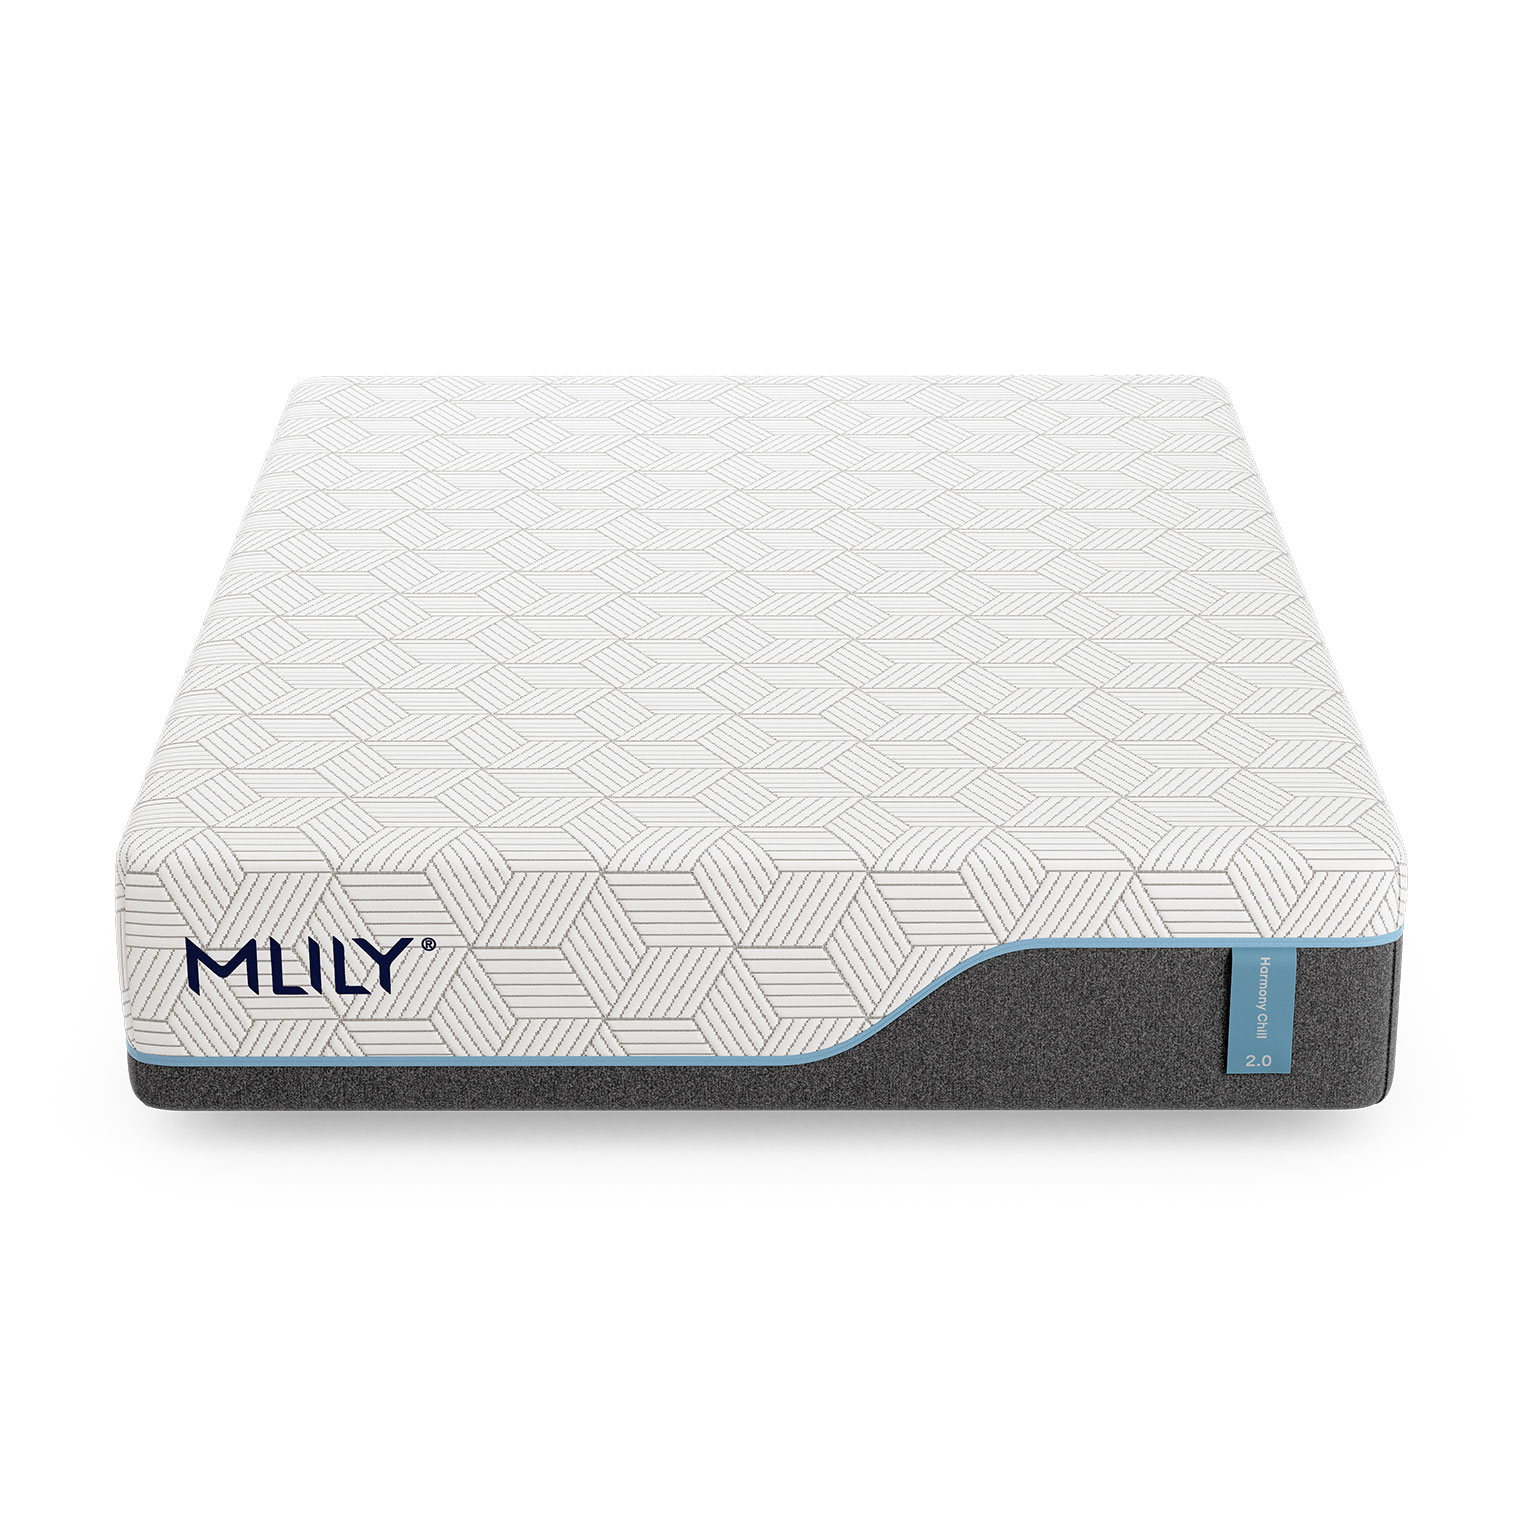 Mlily_2.0_Harmony_Chill_mattress